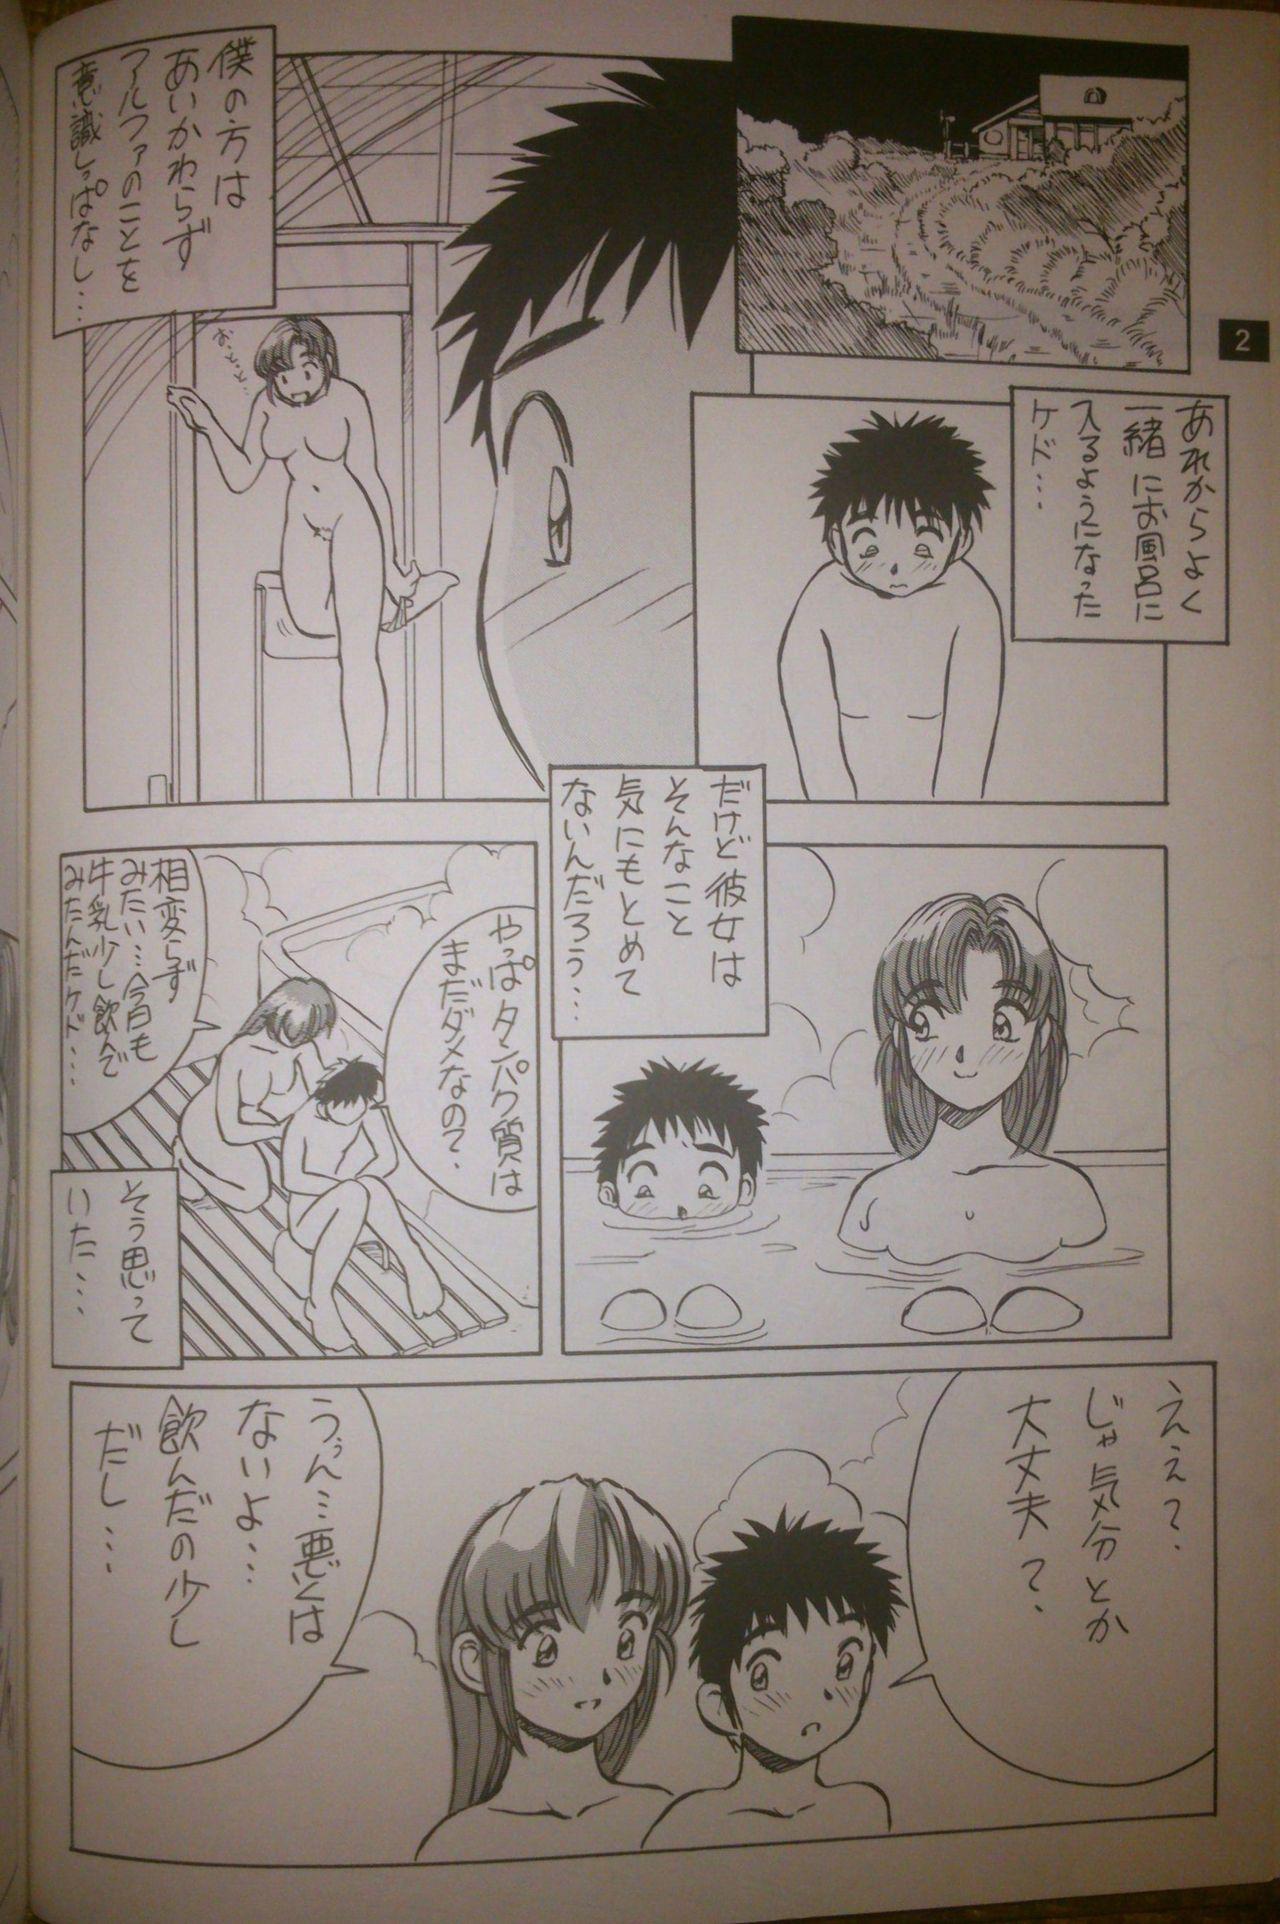 Tetas Artifitial Humanity Tankyuusha Vol. 2 - Yokohama kaidashi kikou Massive - Page 3